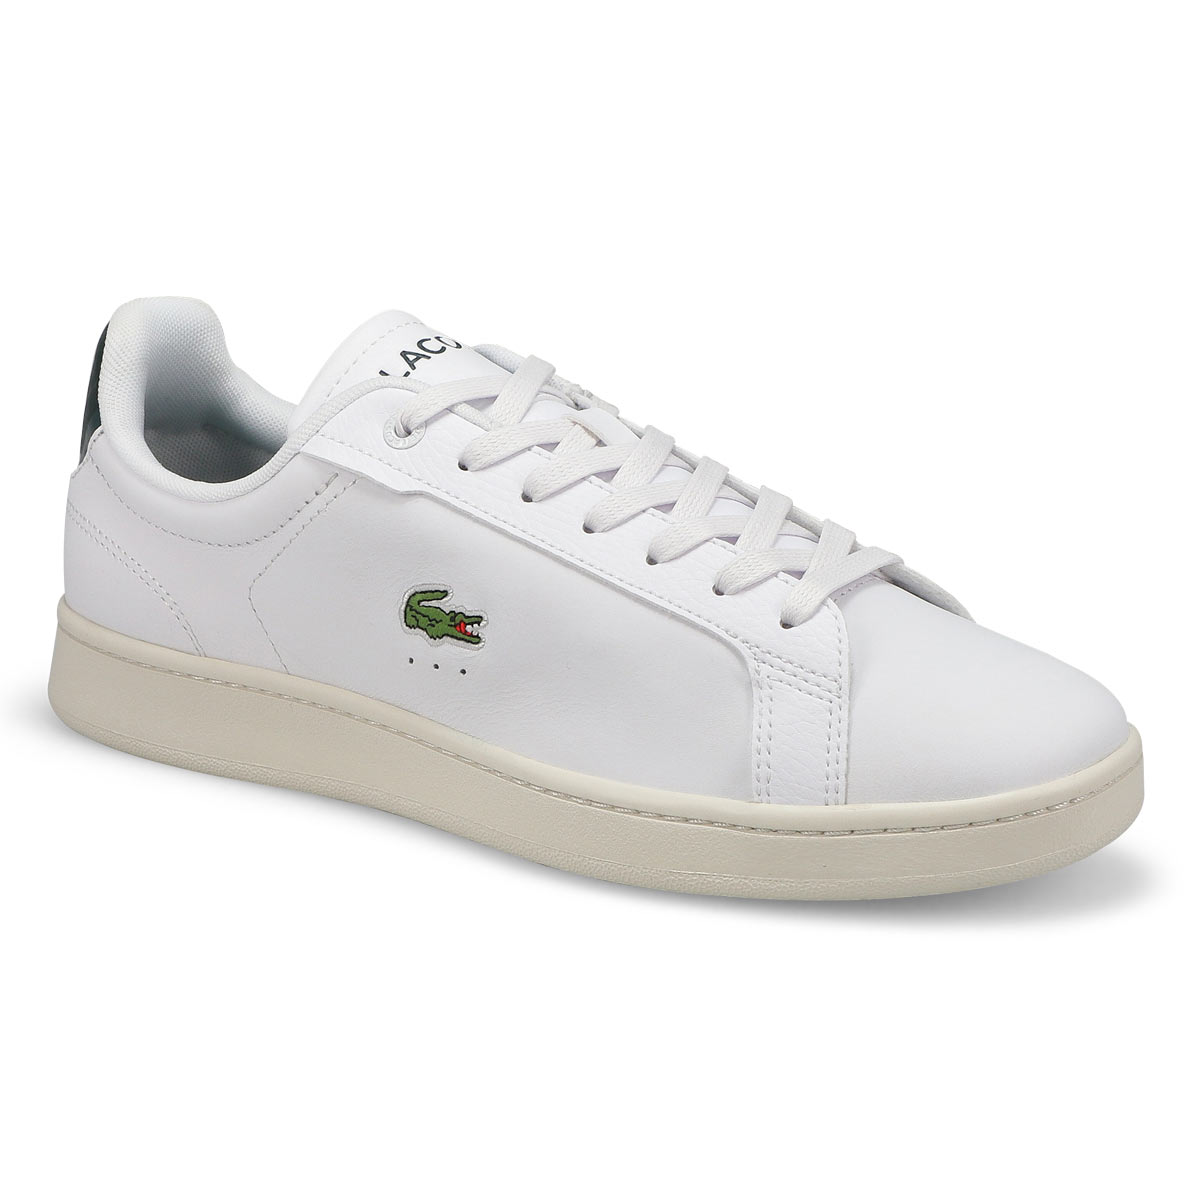 Mens' Carnaby Pro Fashion Sneaker - White/Dark Gre